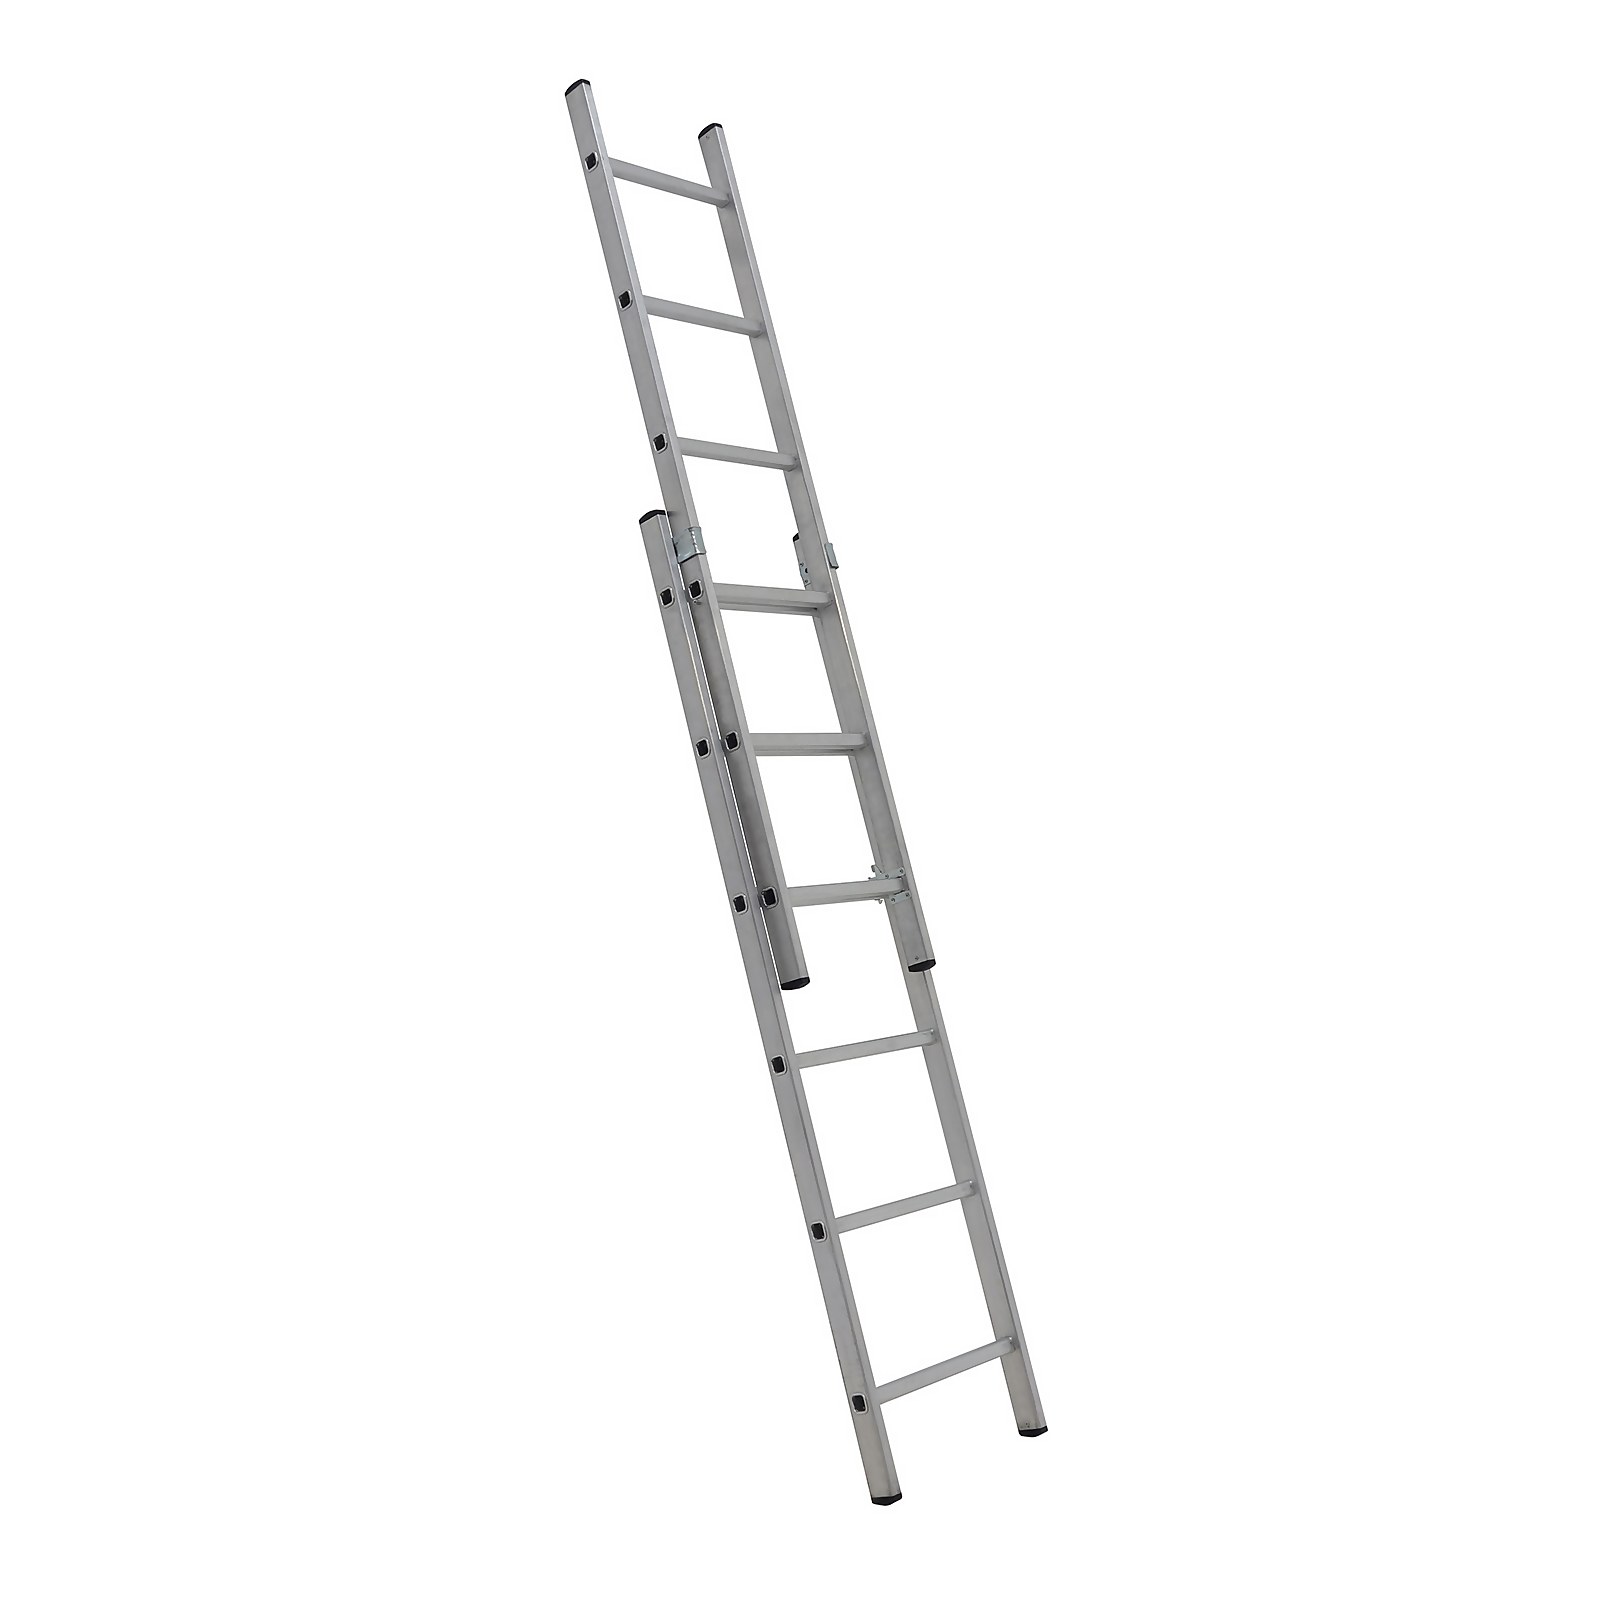 Photo of Rhino 2x6 Professional Extension Ladder - 2.6m